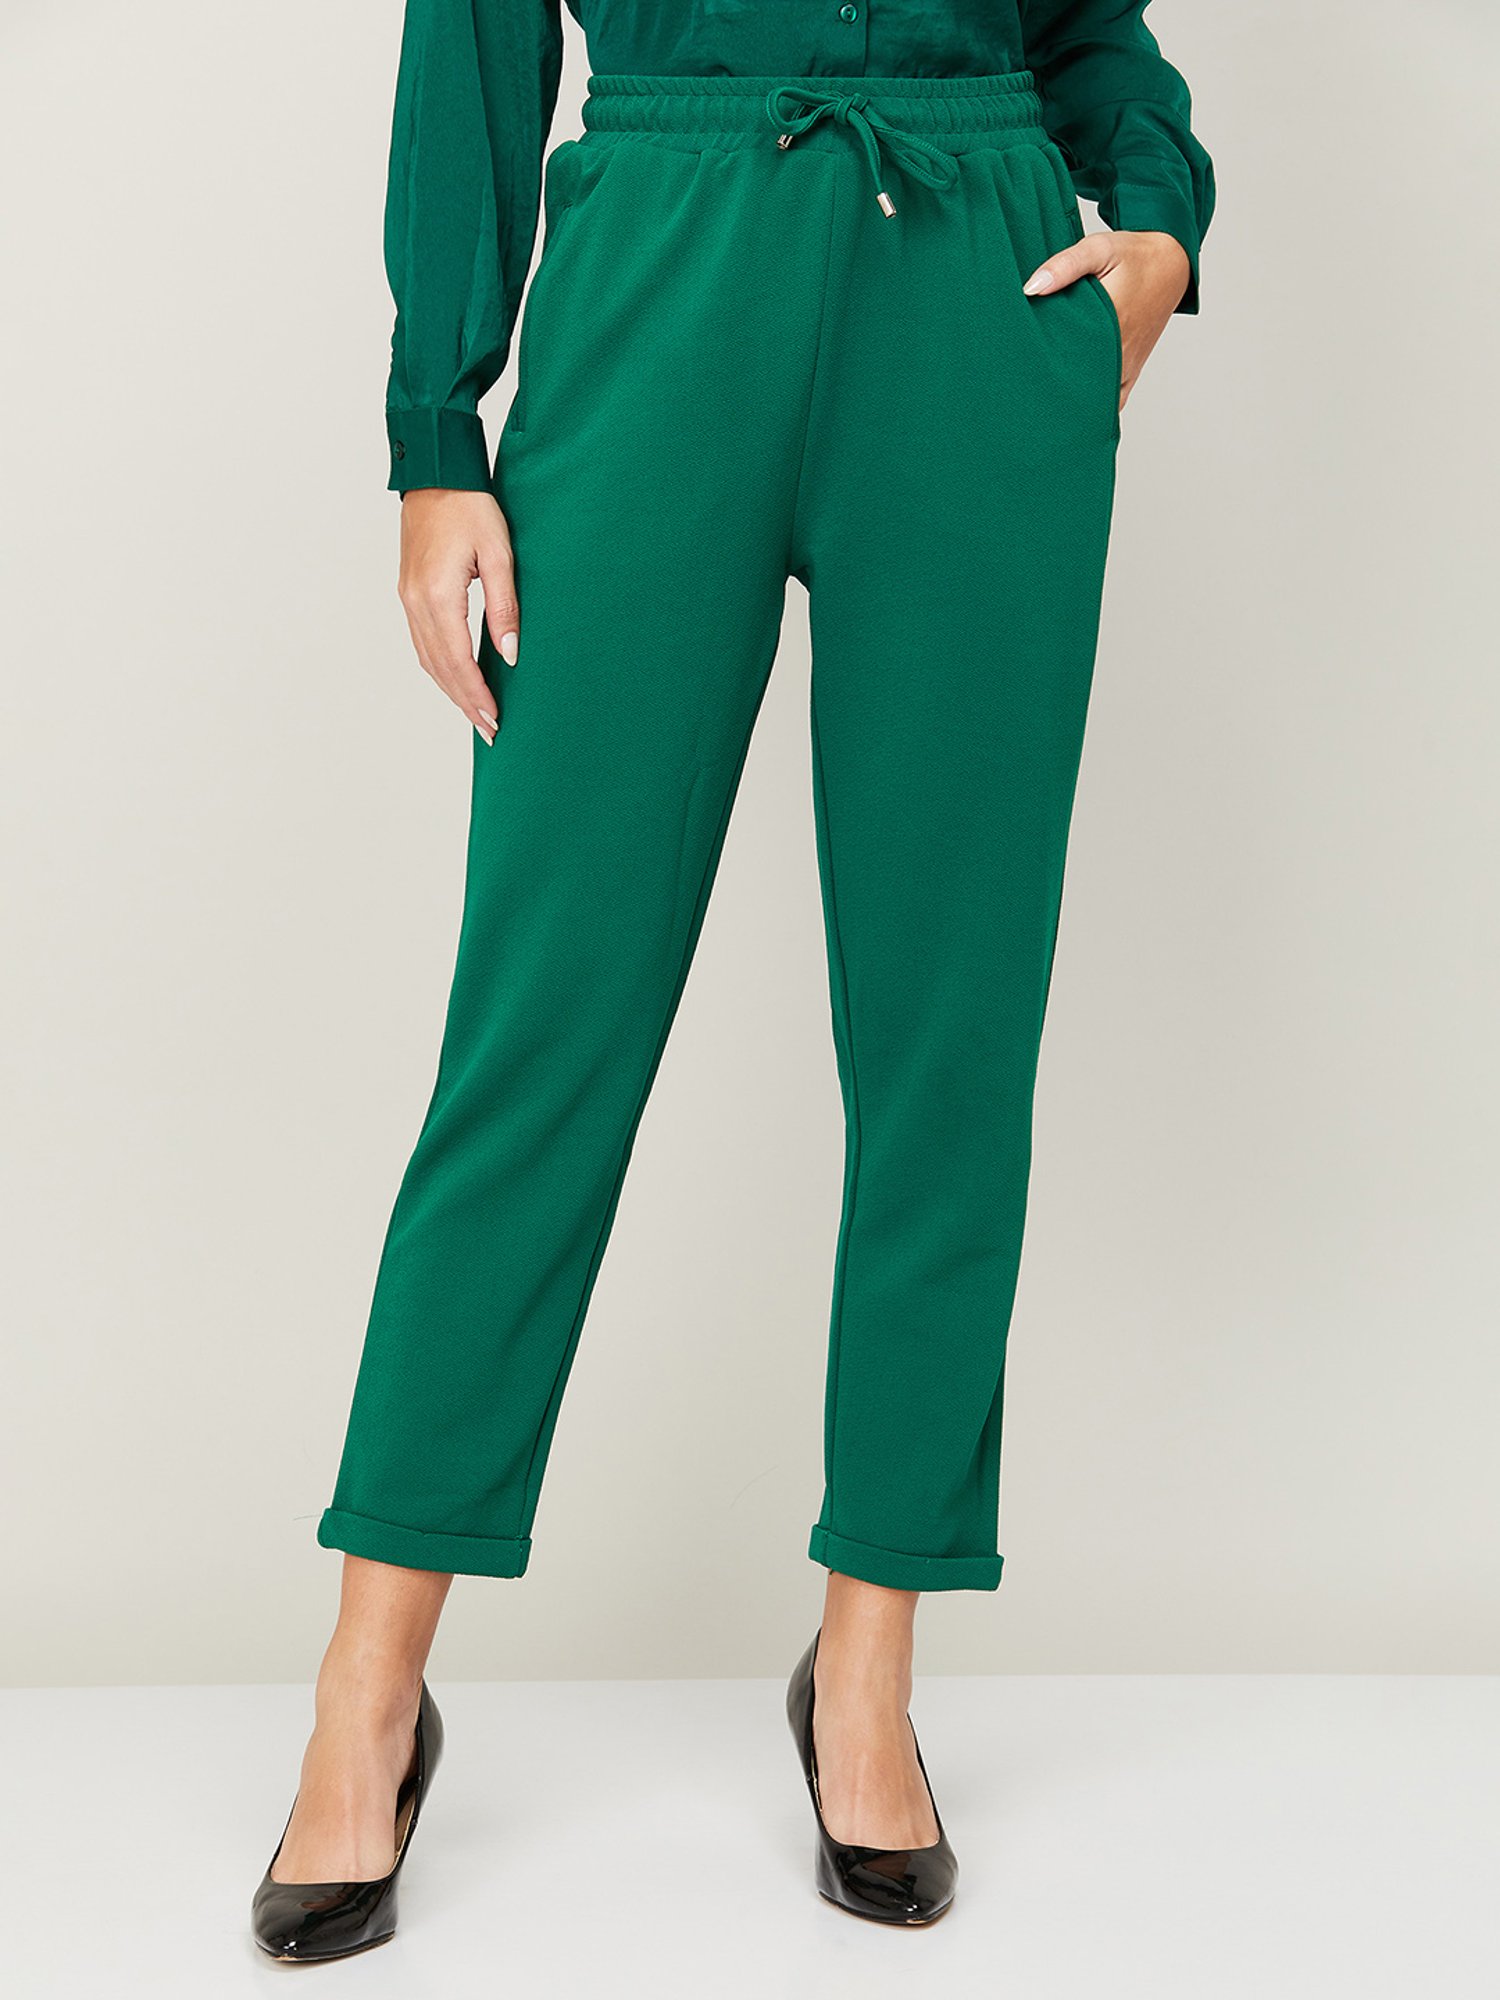 Buy Women Green Regular Fit Solid Casual Track Pants Online  609555   Allen Solly